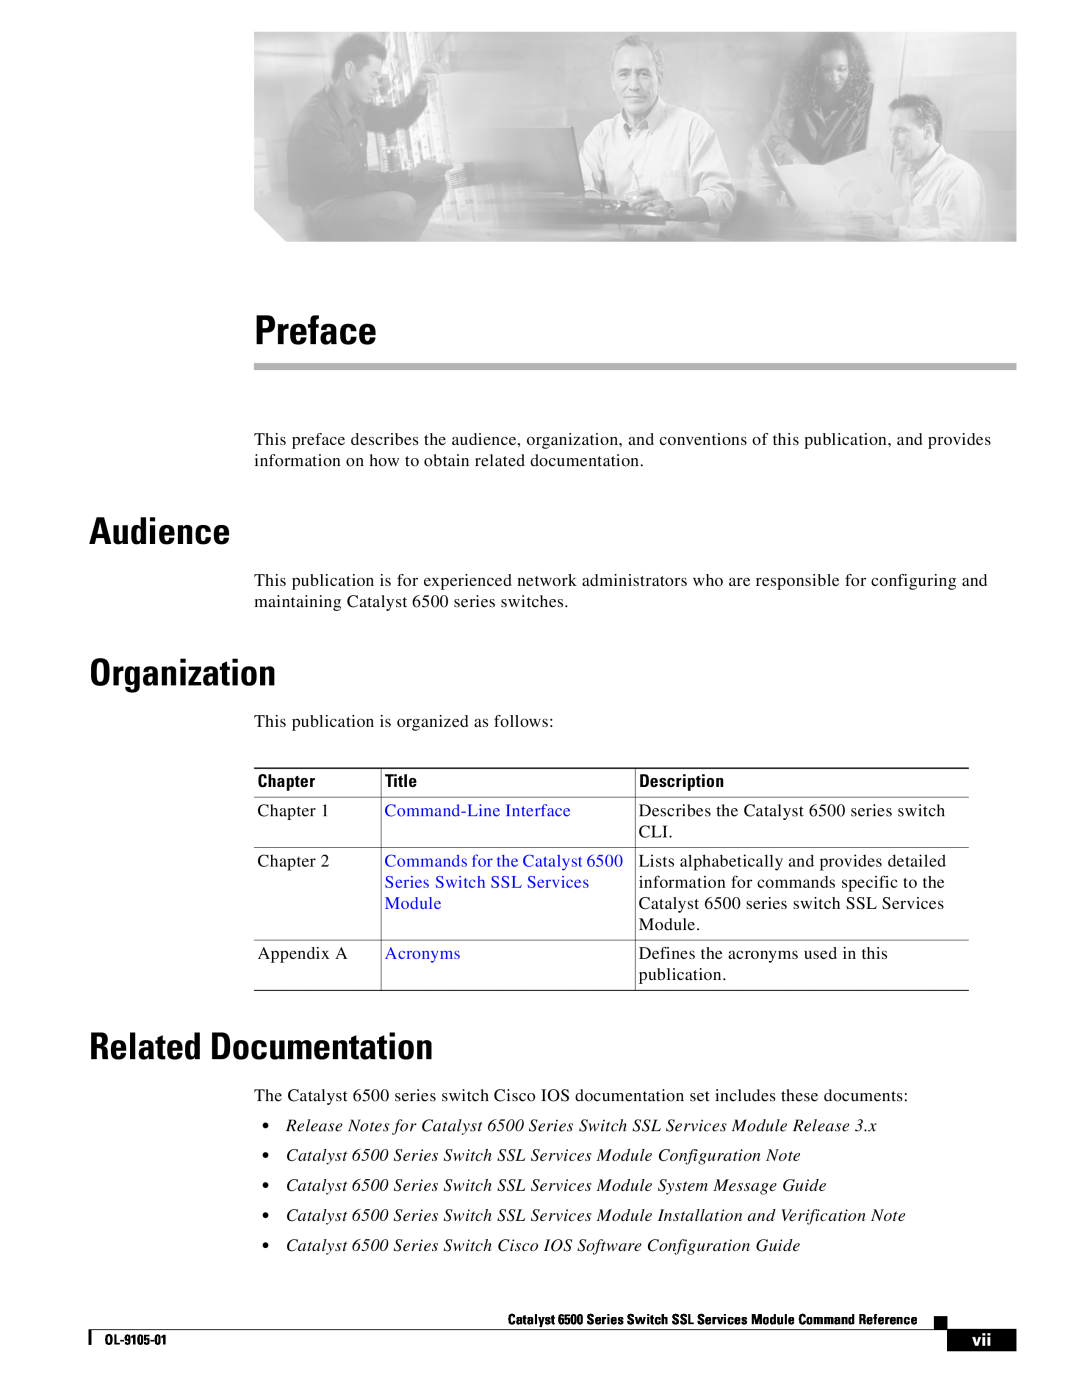 Cisco Systems 6500 Preface, Audience, Organization, Related Documentation, Chapter, Title, Description, Module, Acronyms 